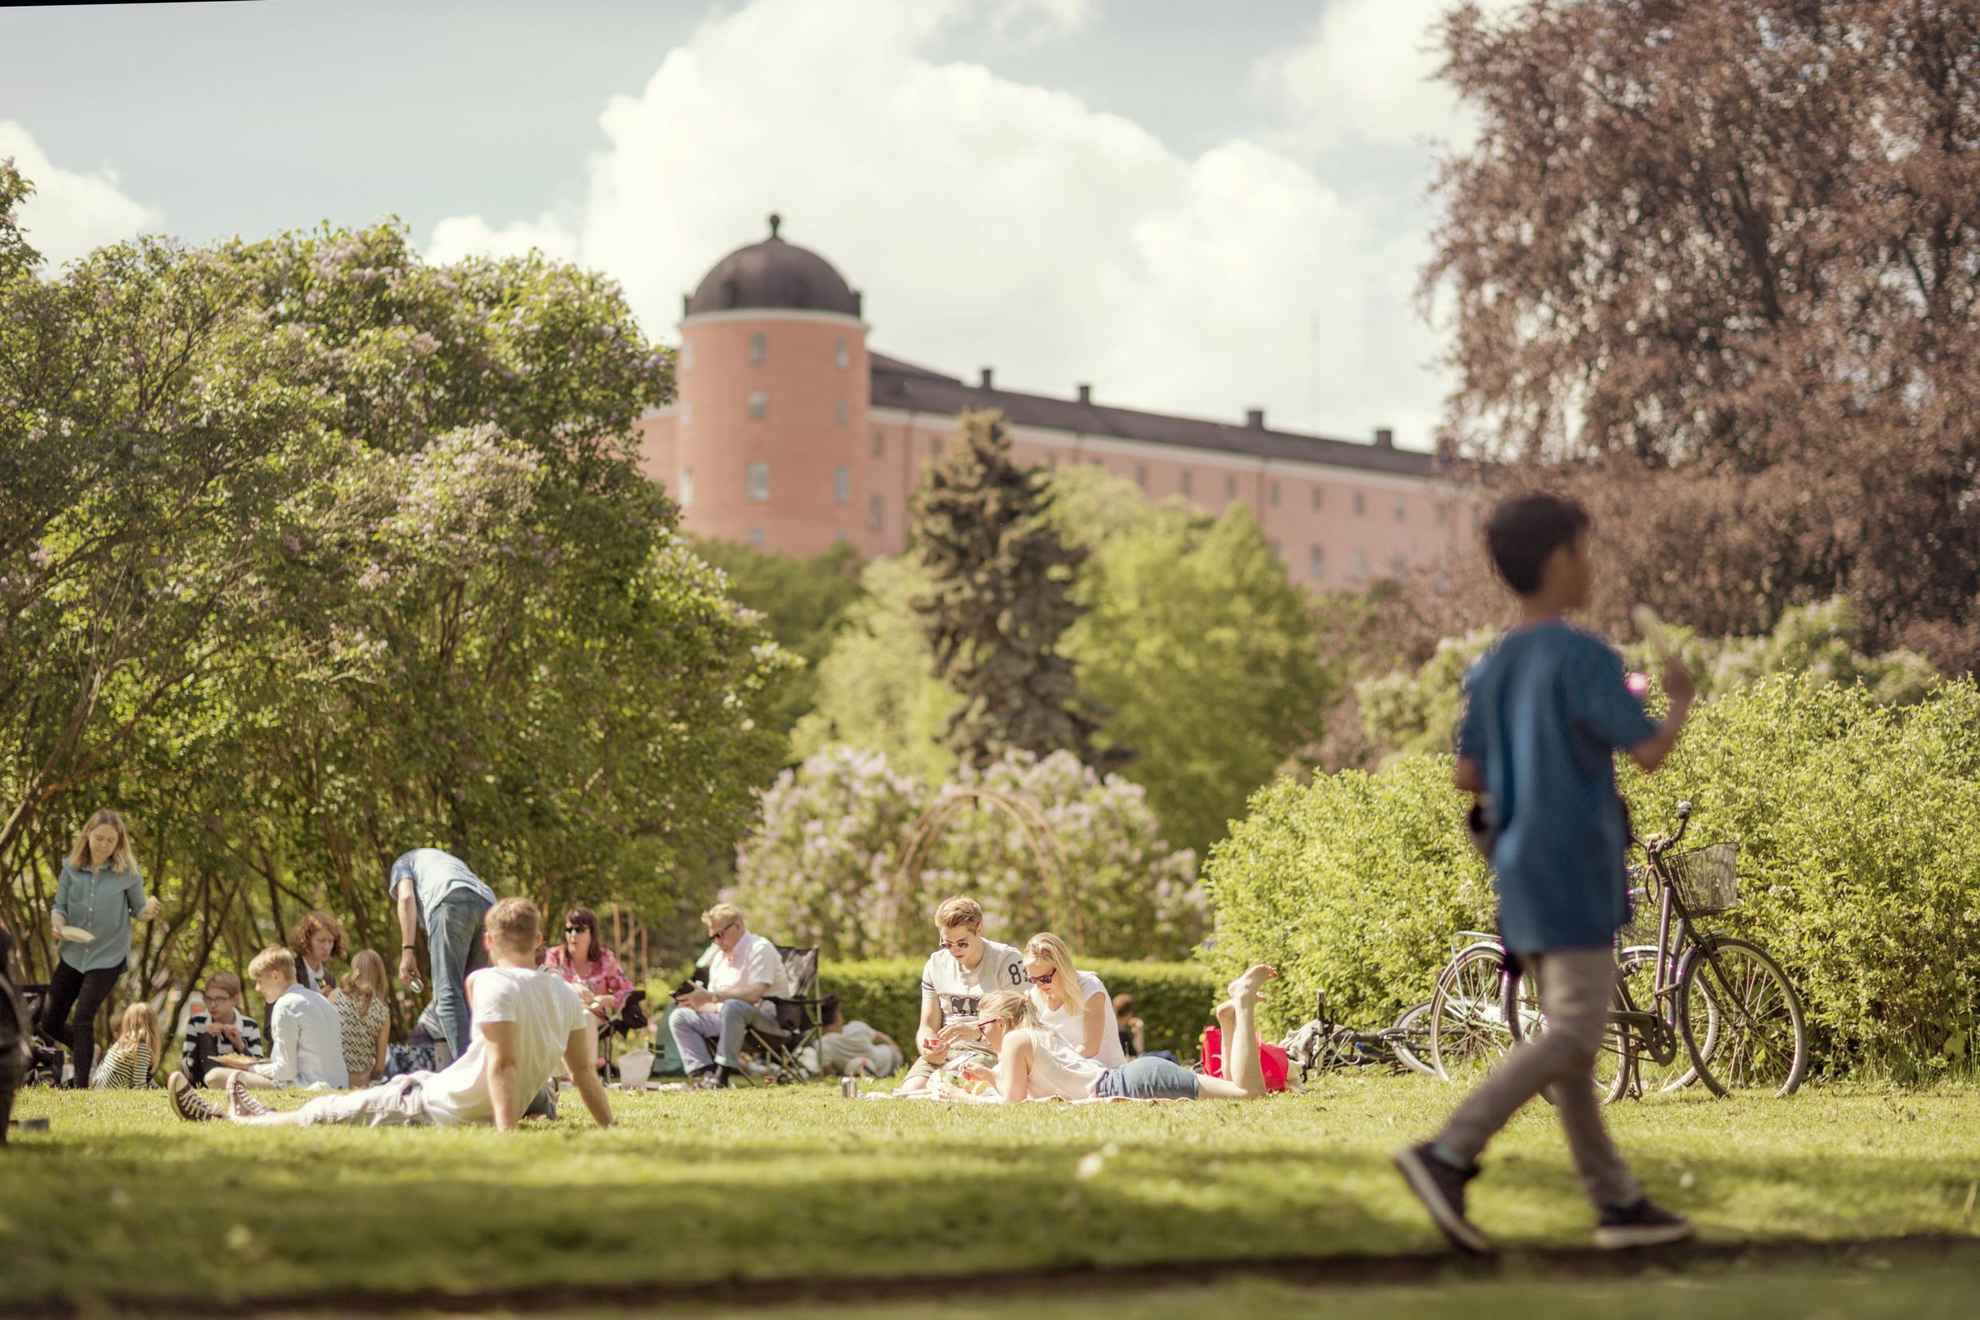 Picknick in de Uppsala stadstuin